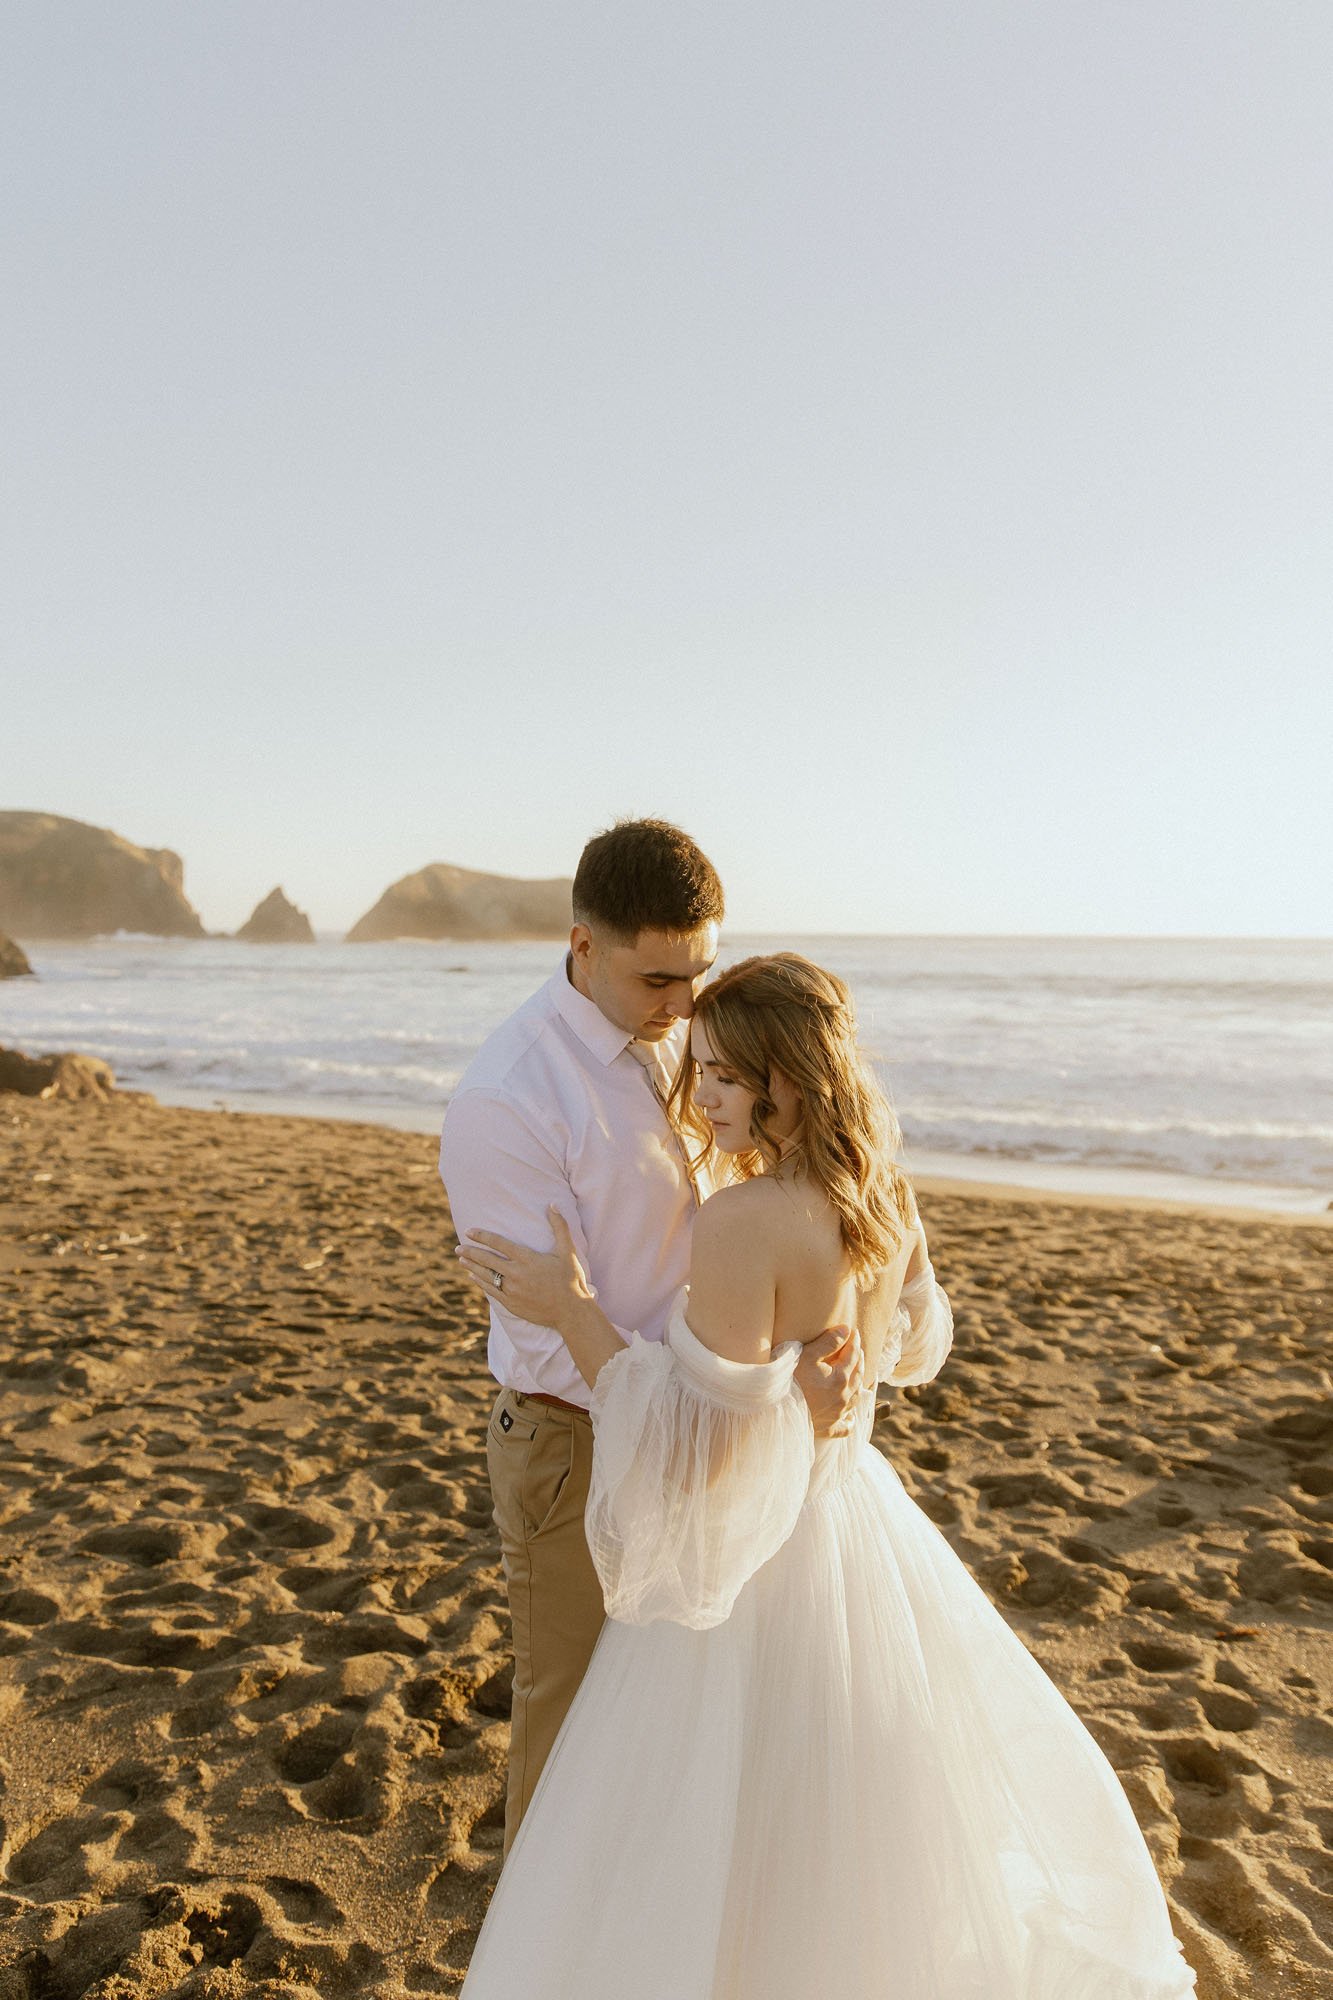 Alena-Leena-Armeria-Wedding-Dress-Rodeo-Beach-Elopement-02.jpg